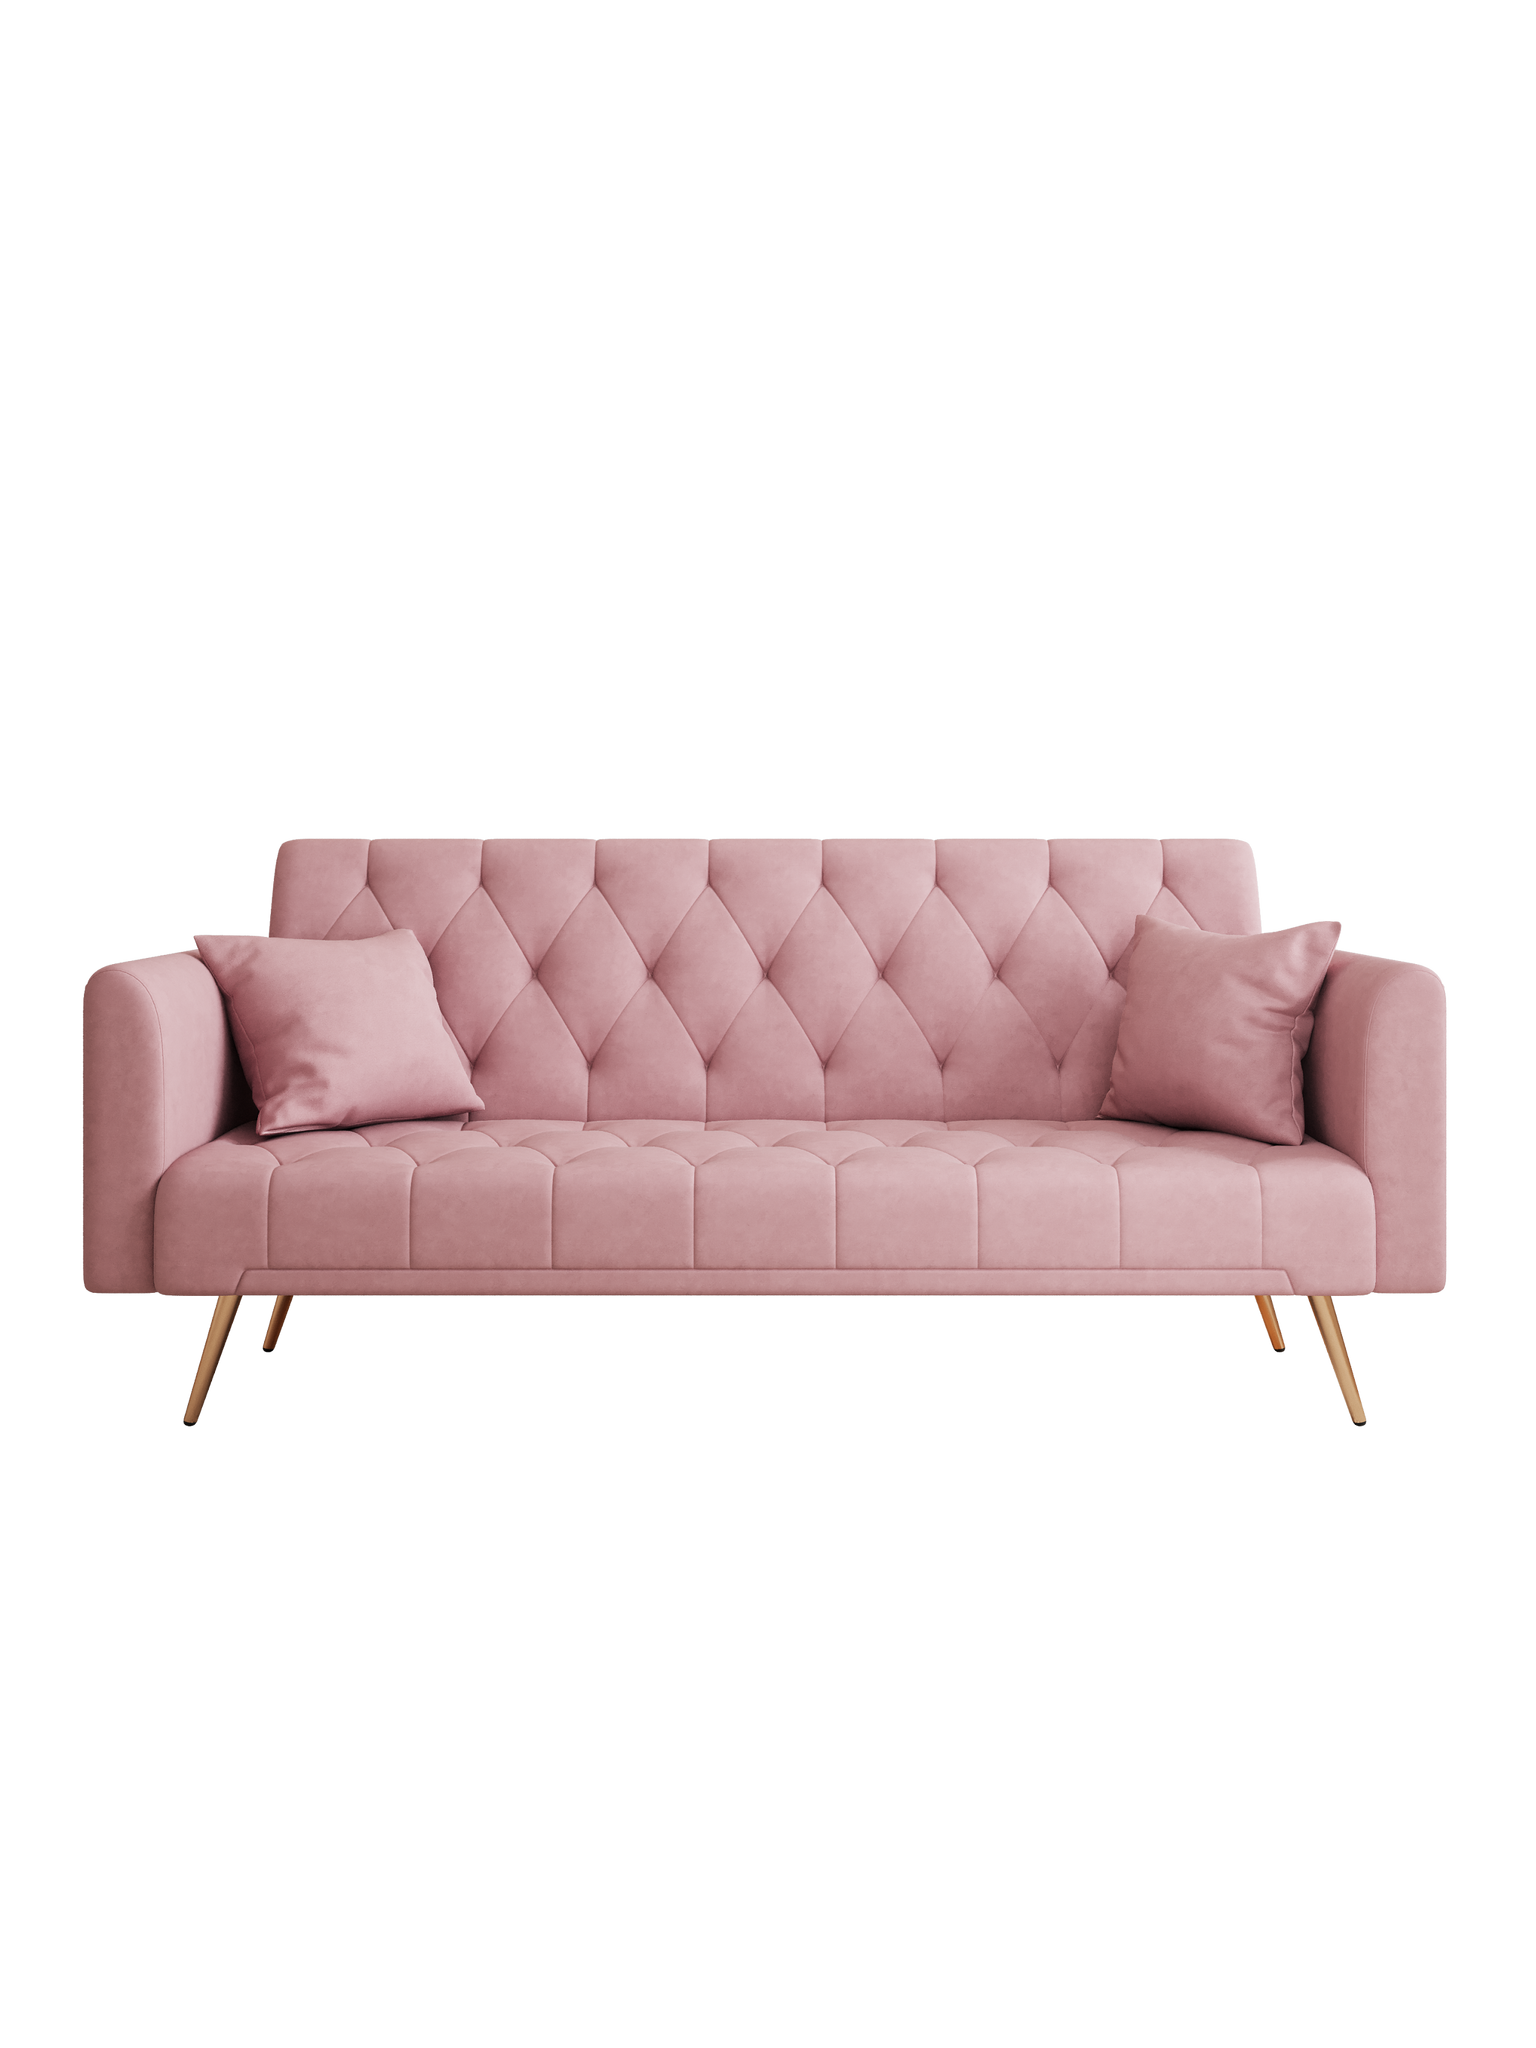 71" Convertible Double Folding Living Room Sofa Bed pink-velvet